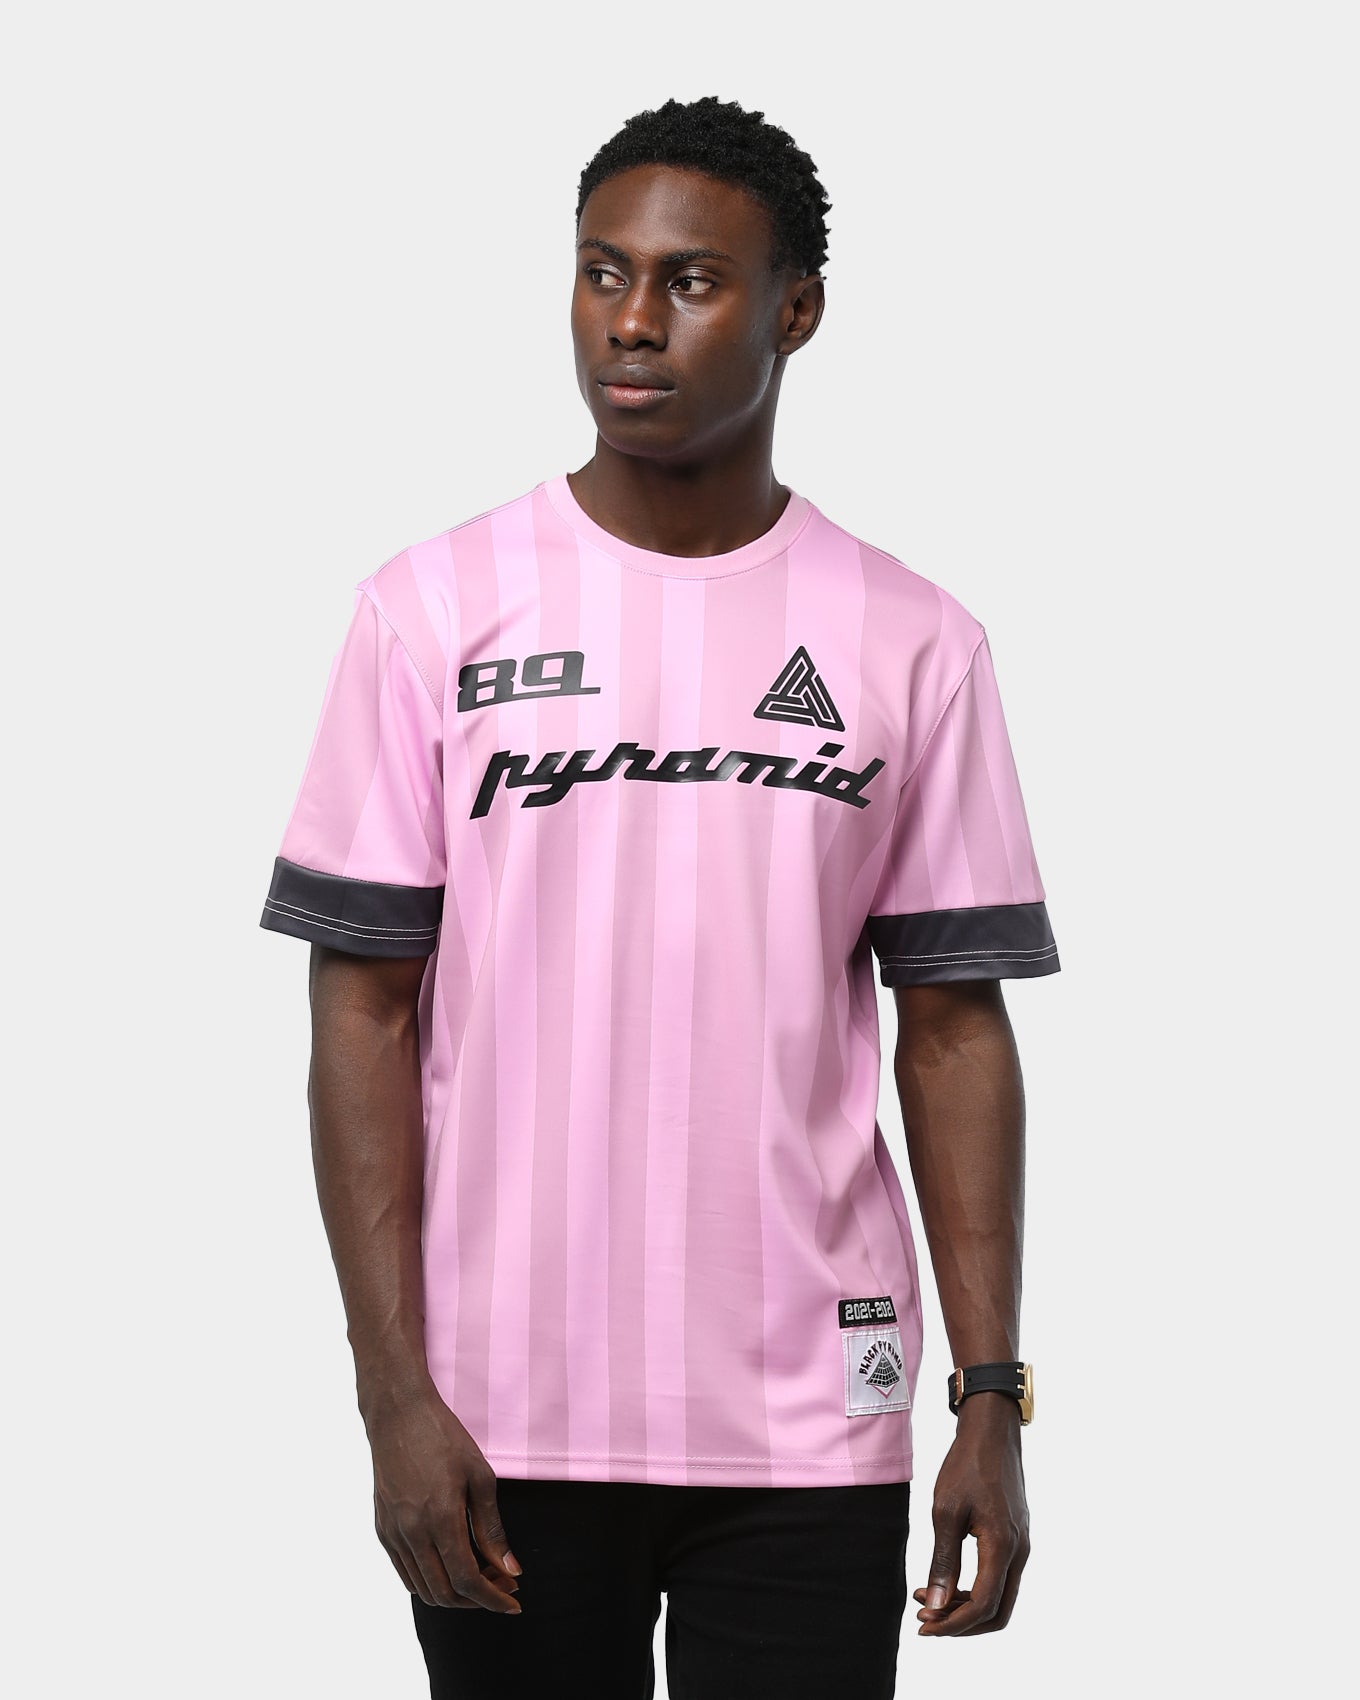 pink soccer jersey